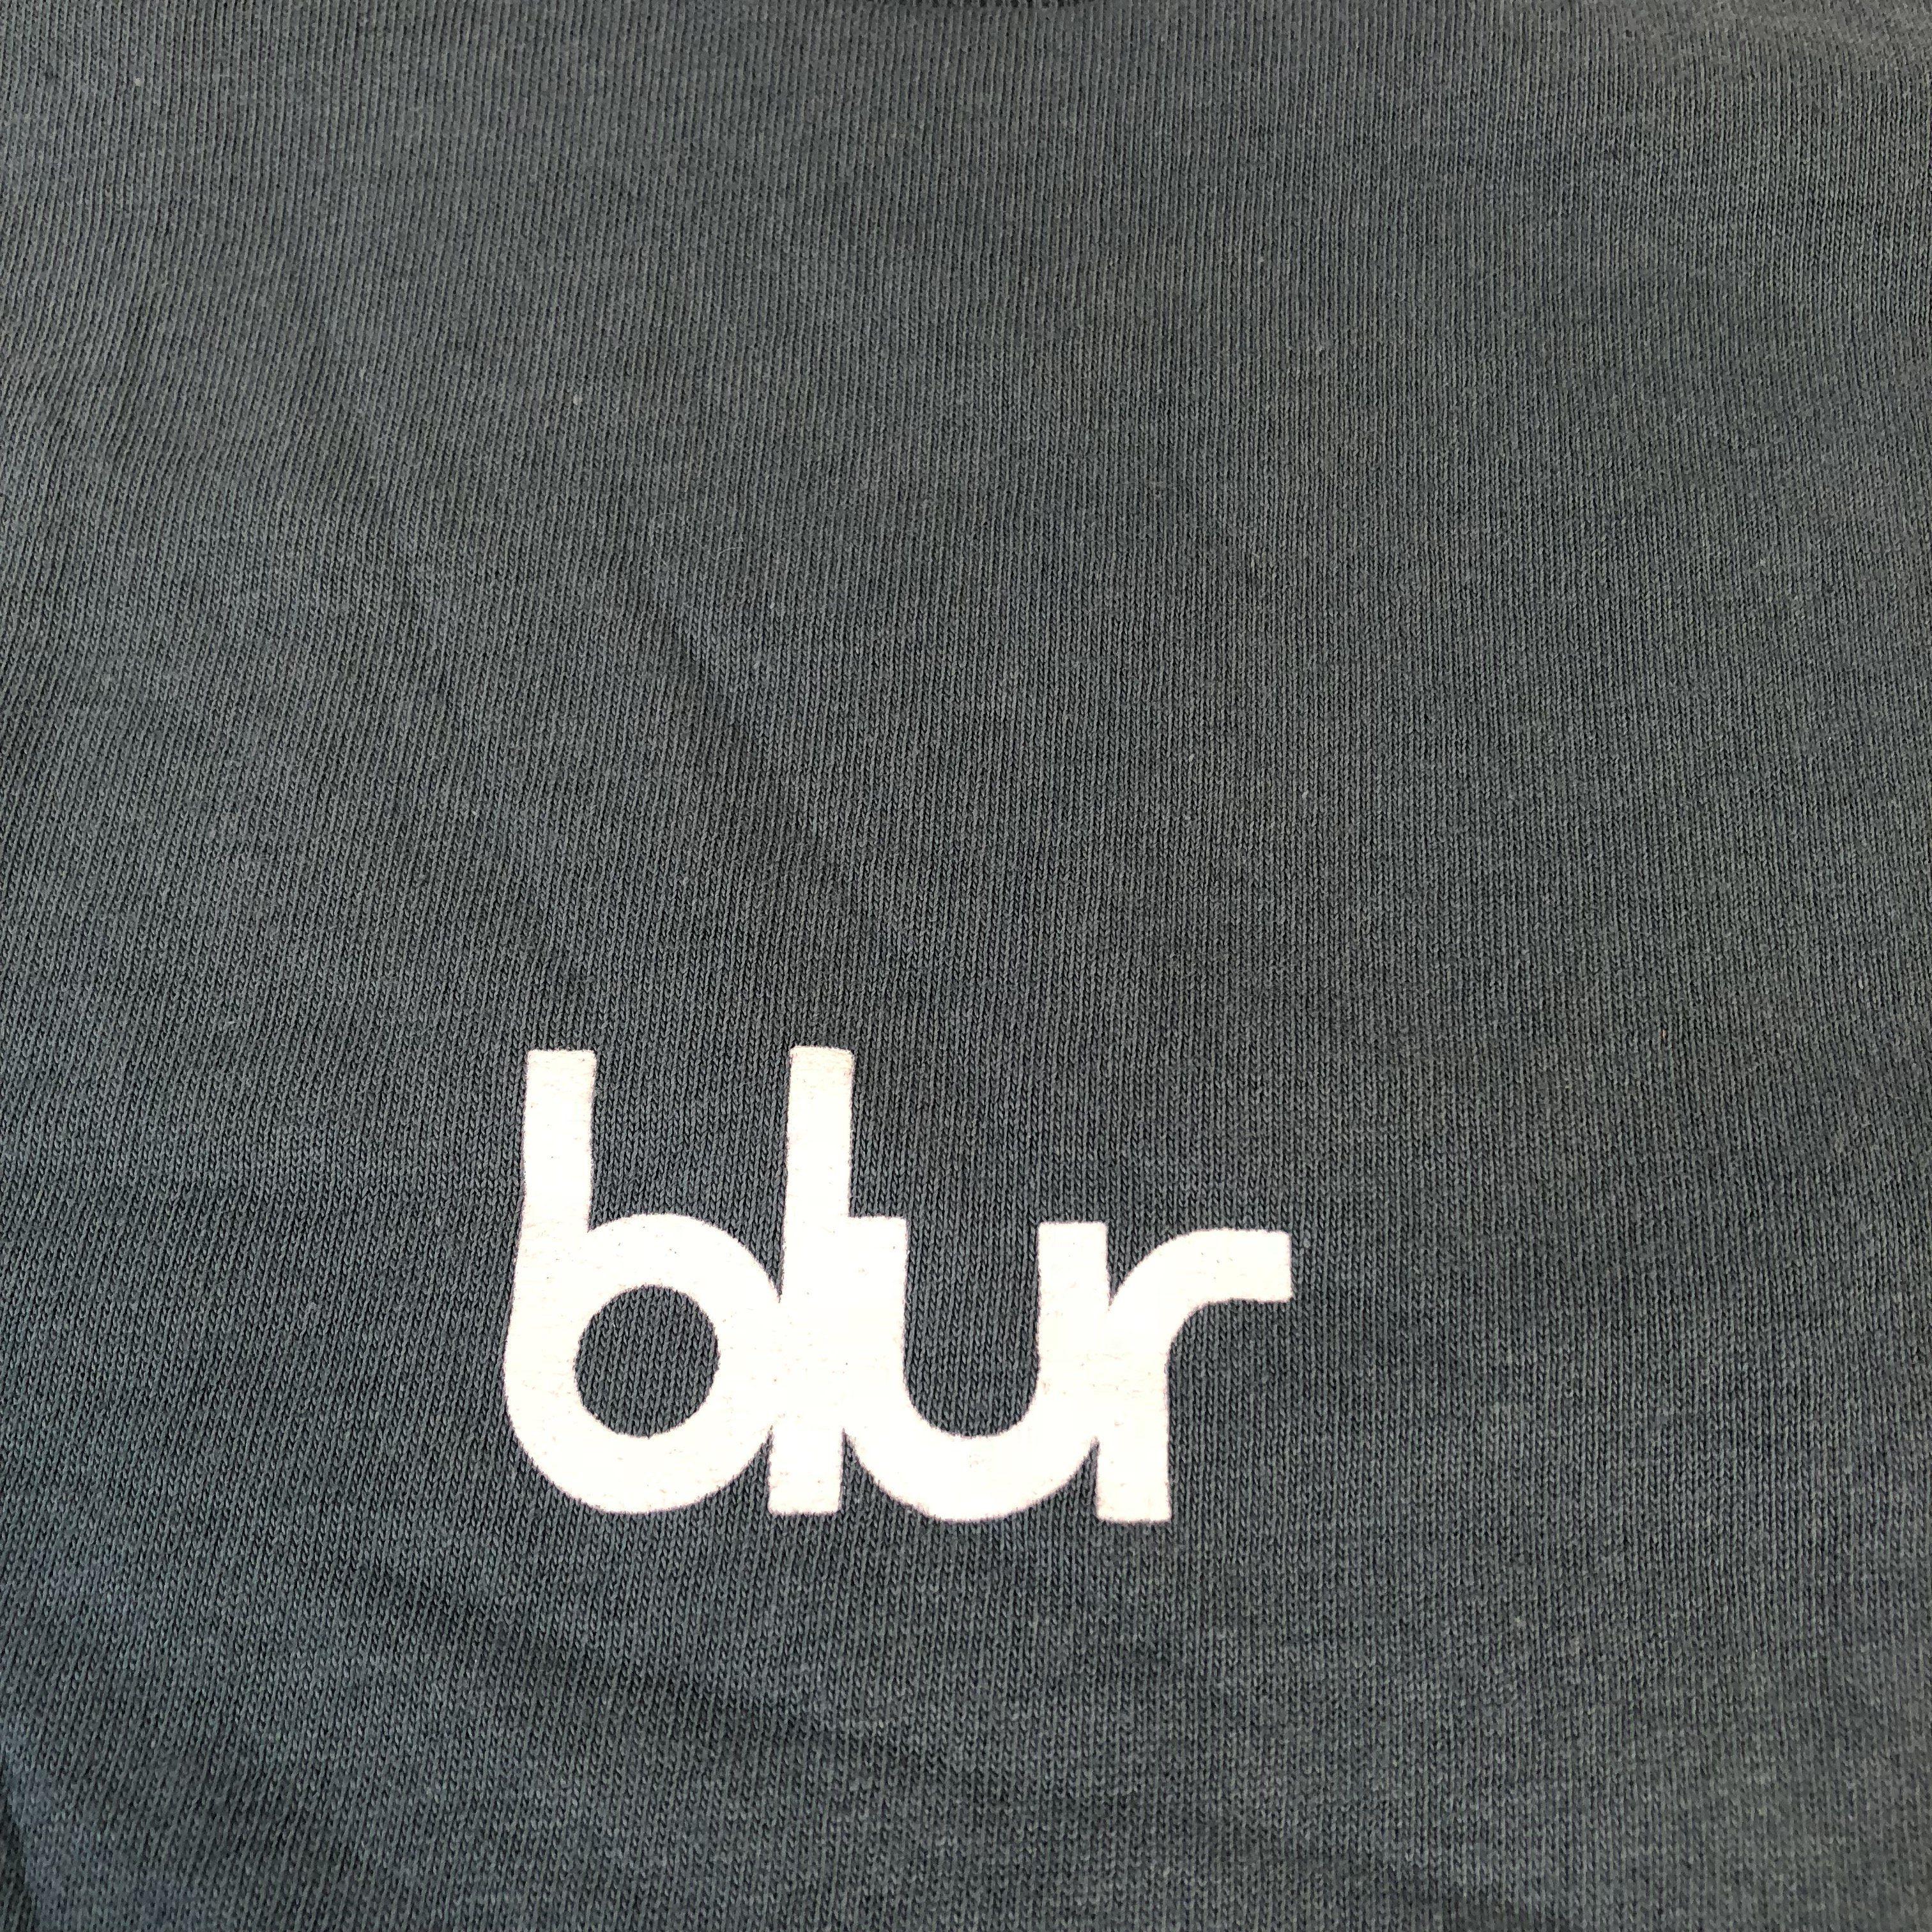 Blur Logo - LogoDix